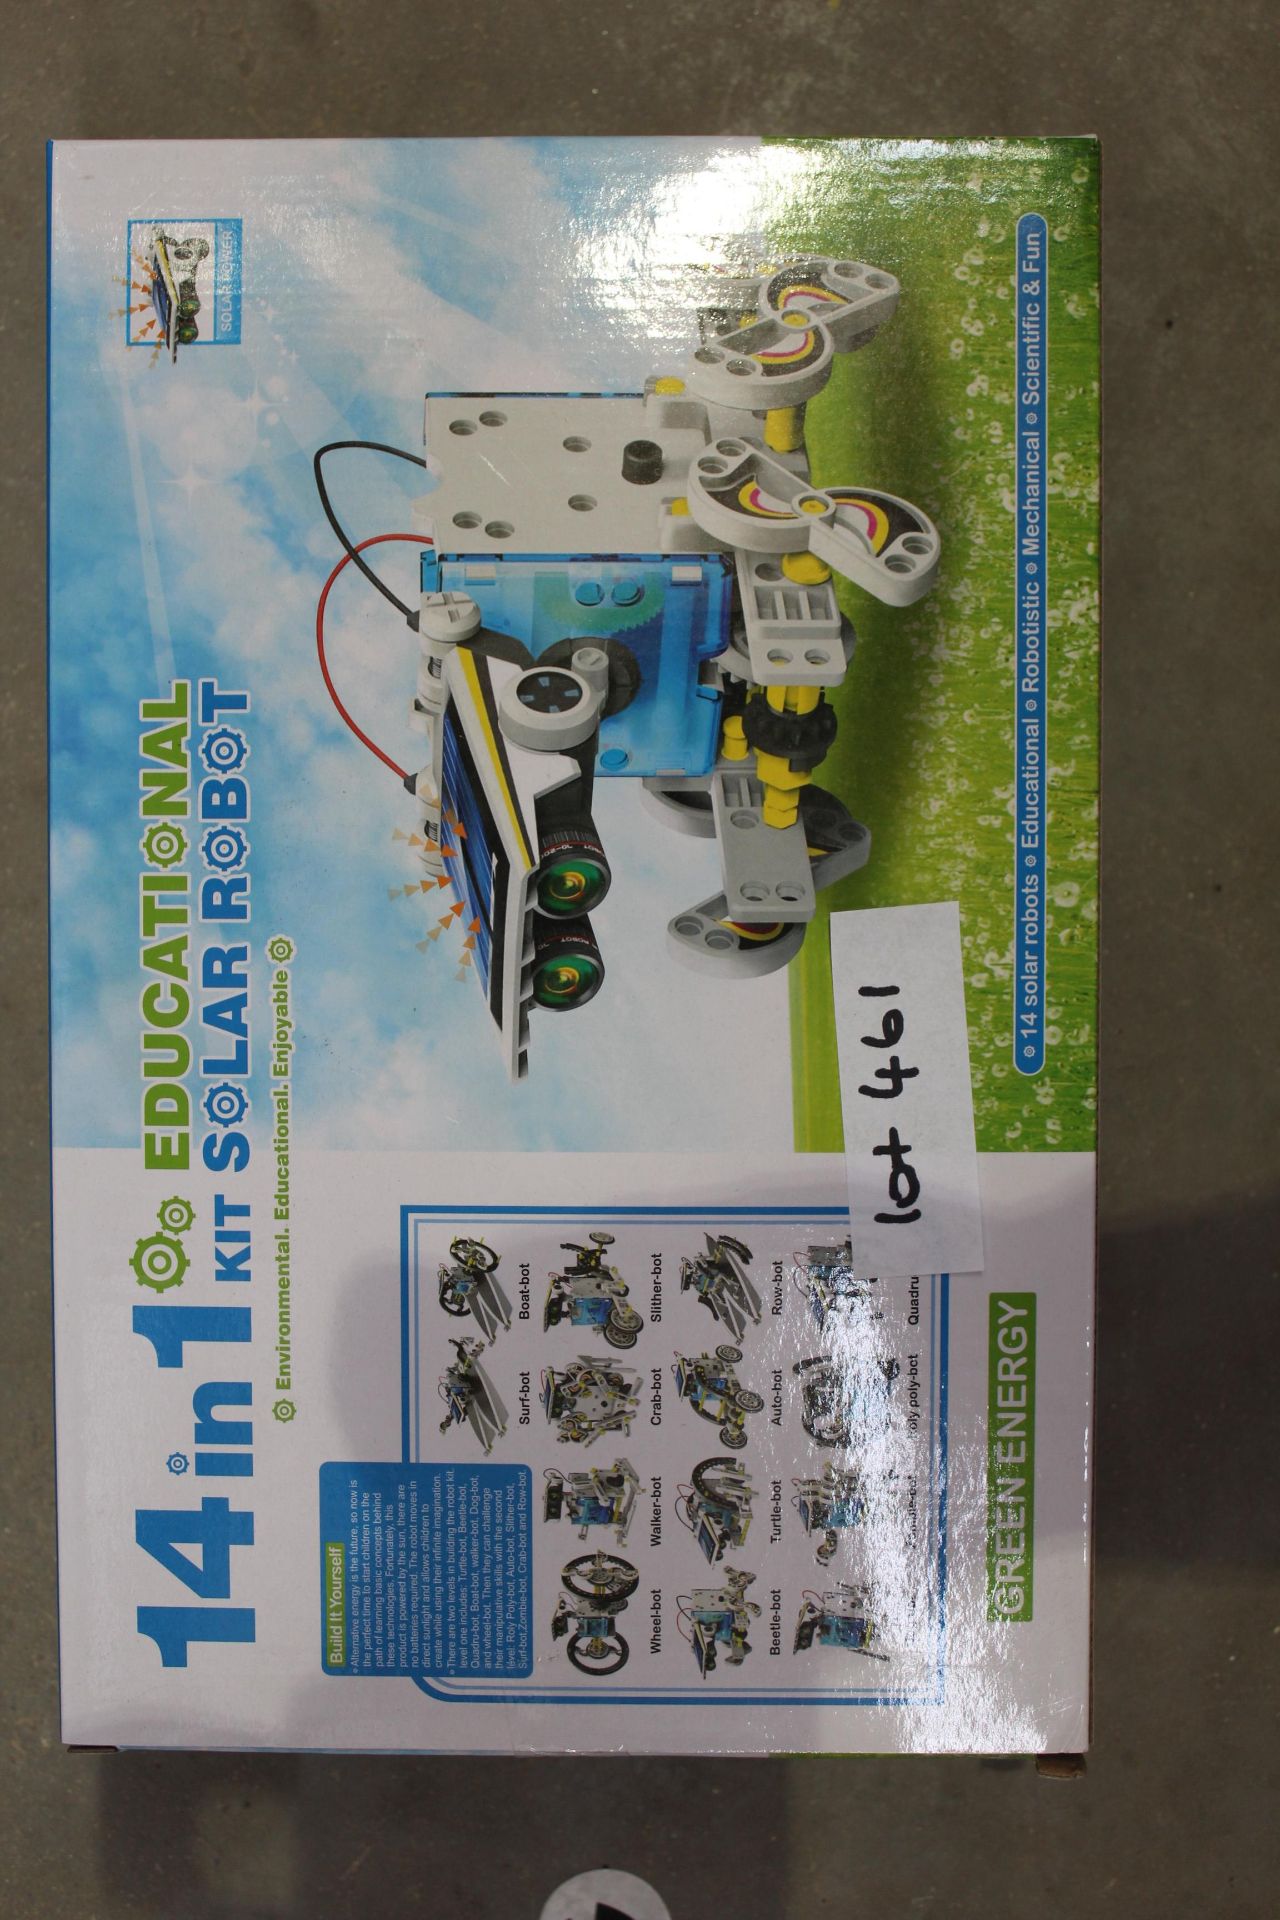 Three 4 in 1 Educational Robot Solar Kits